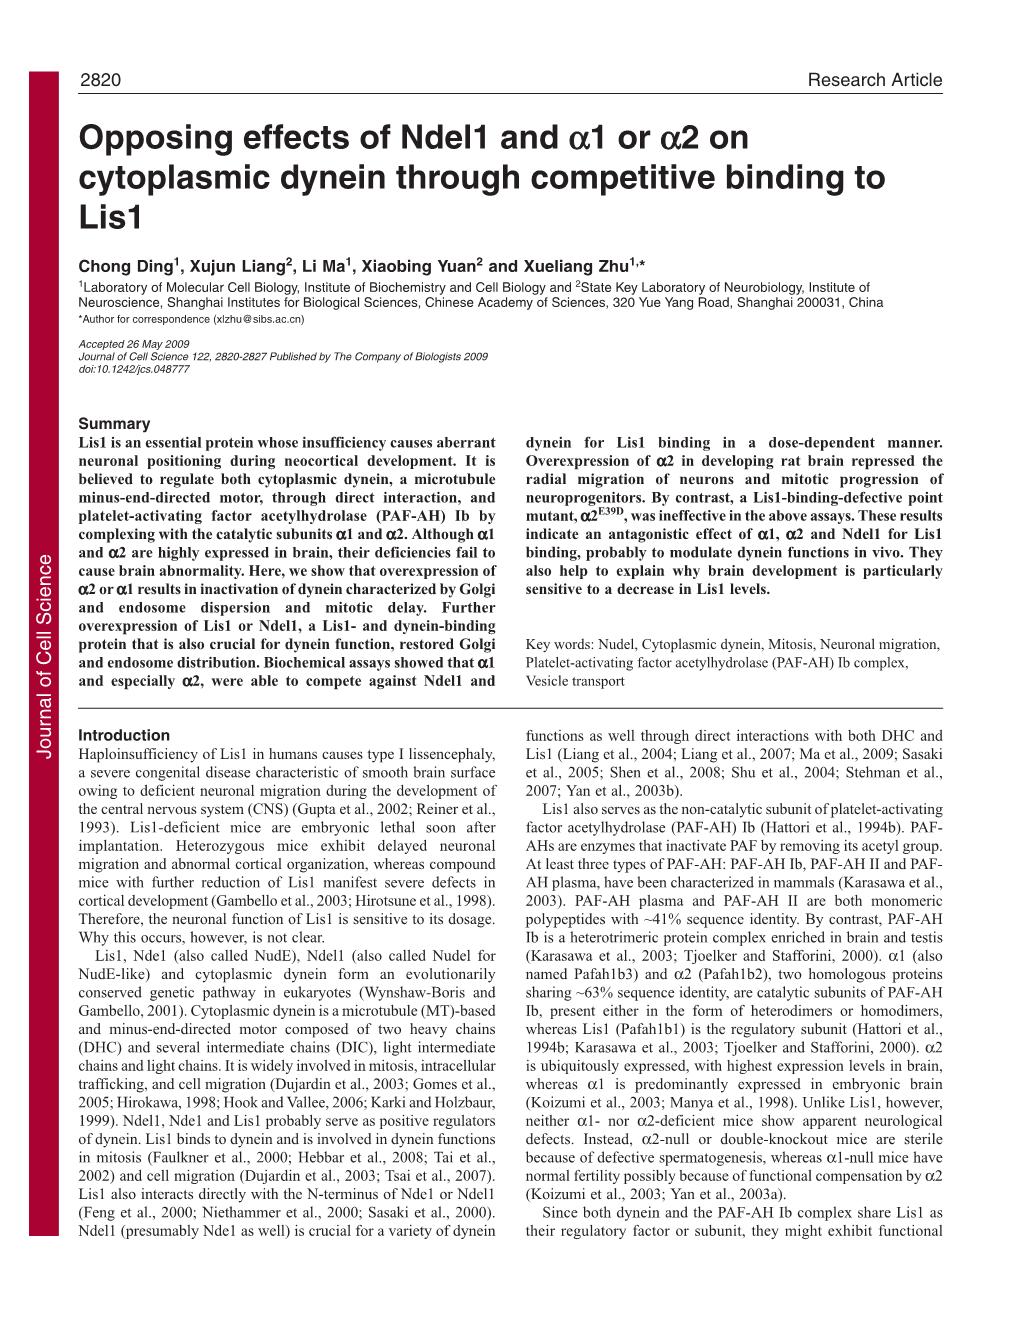 Opposing Effects of Ndel1 and Α1 Or Α2 on Cytoplasmic Dynein Through